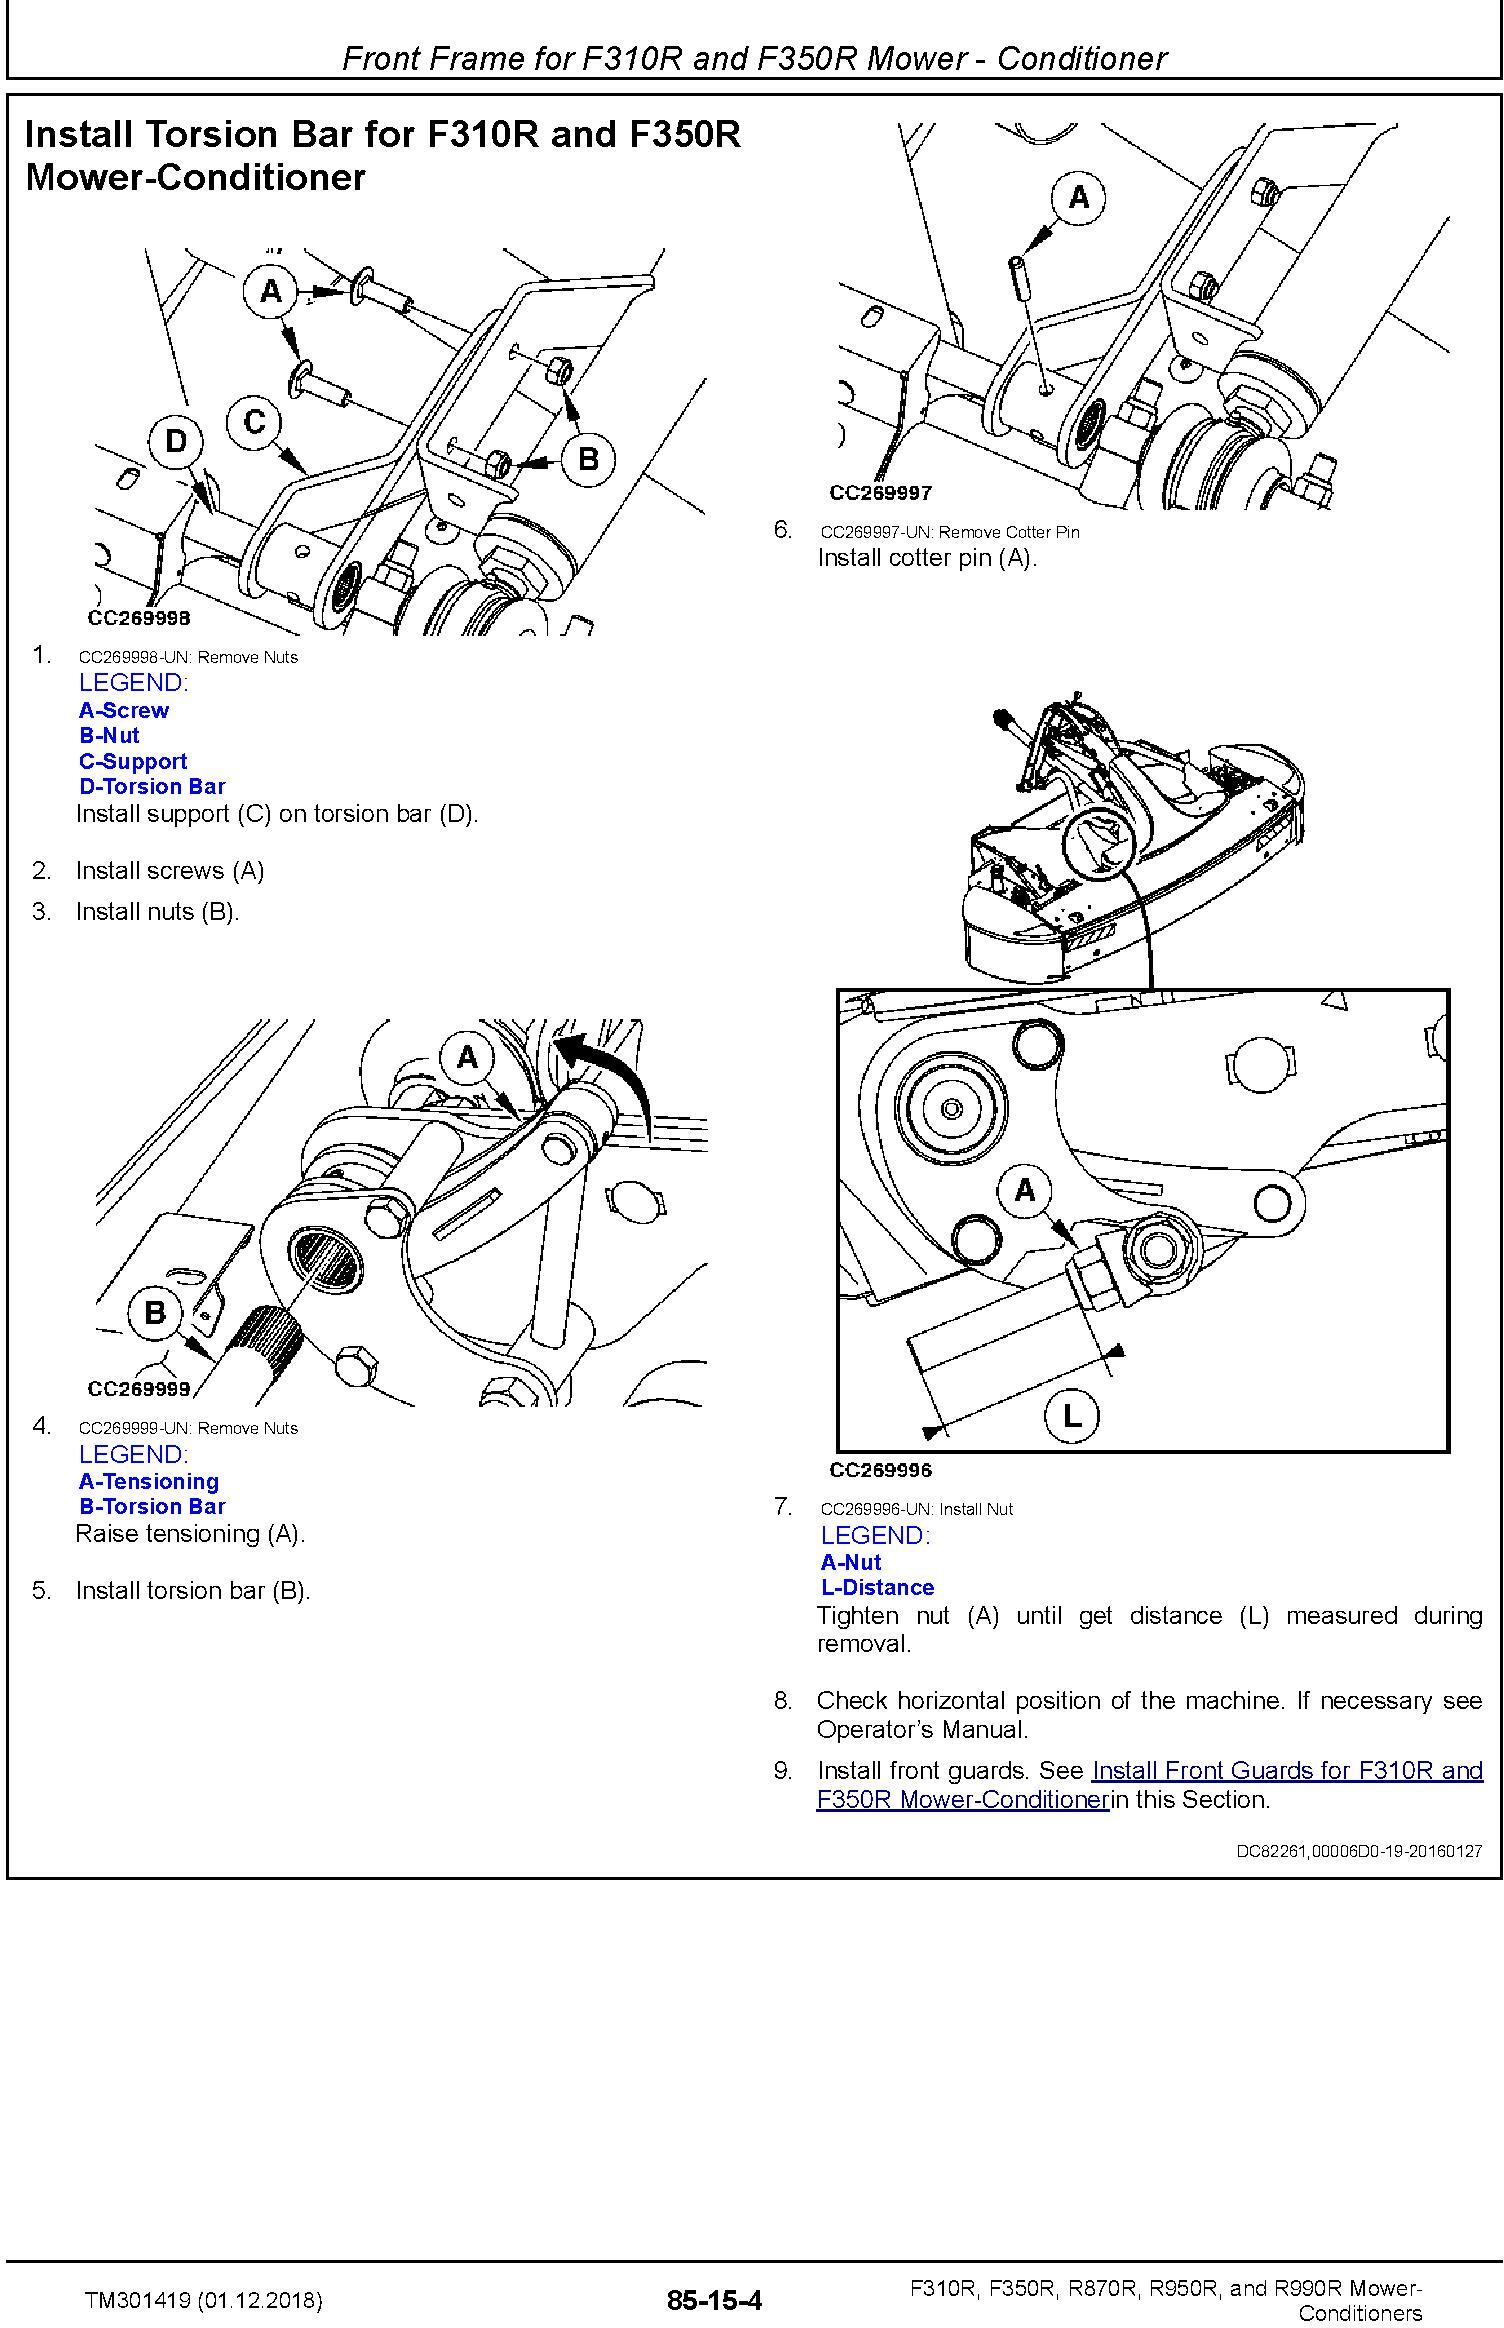 John Deere F310R, F350R, R870R, R950R and R990R Mower-Conditioners Technical Manual (TM301419) - 3